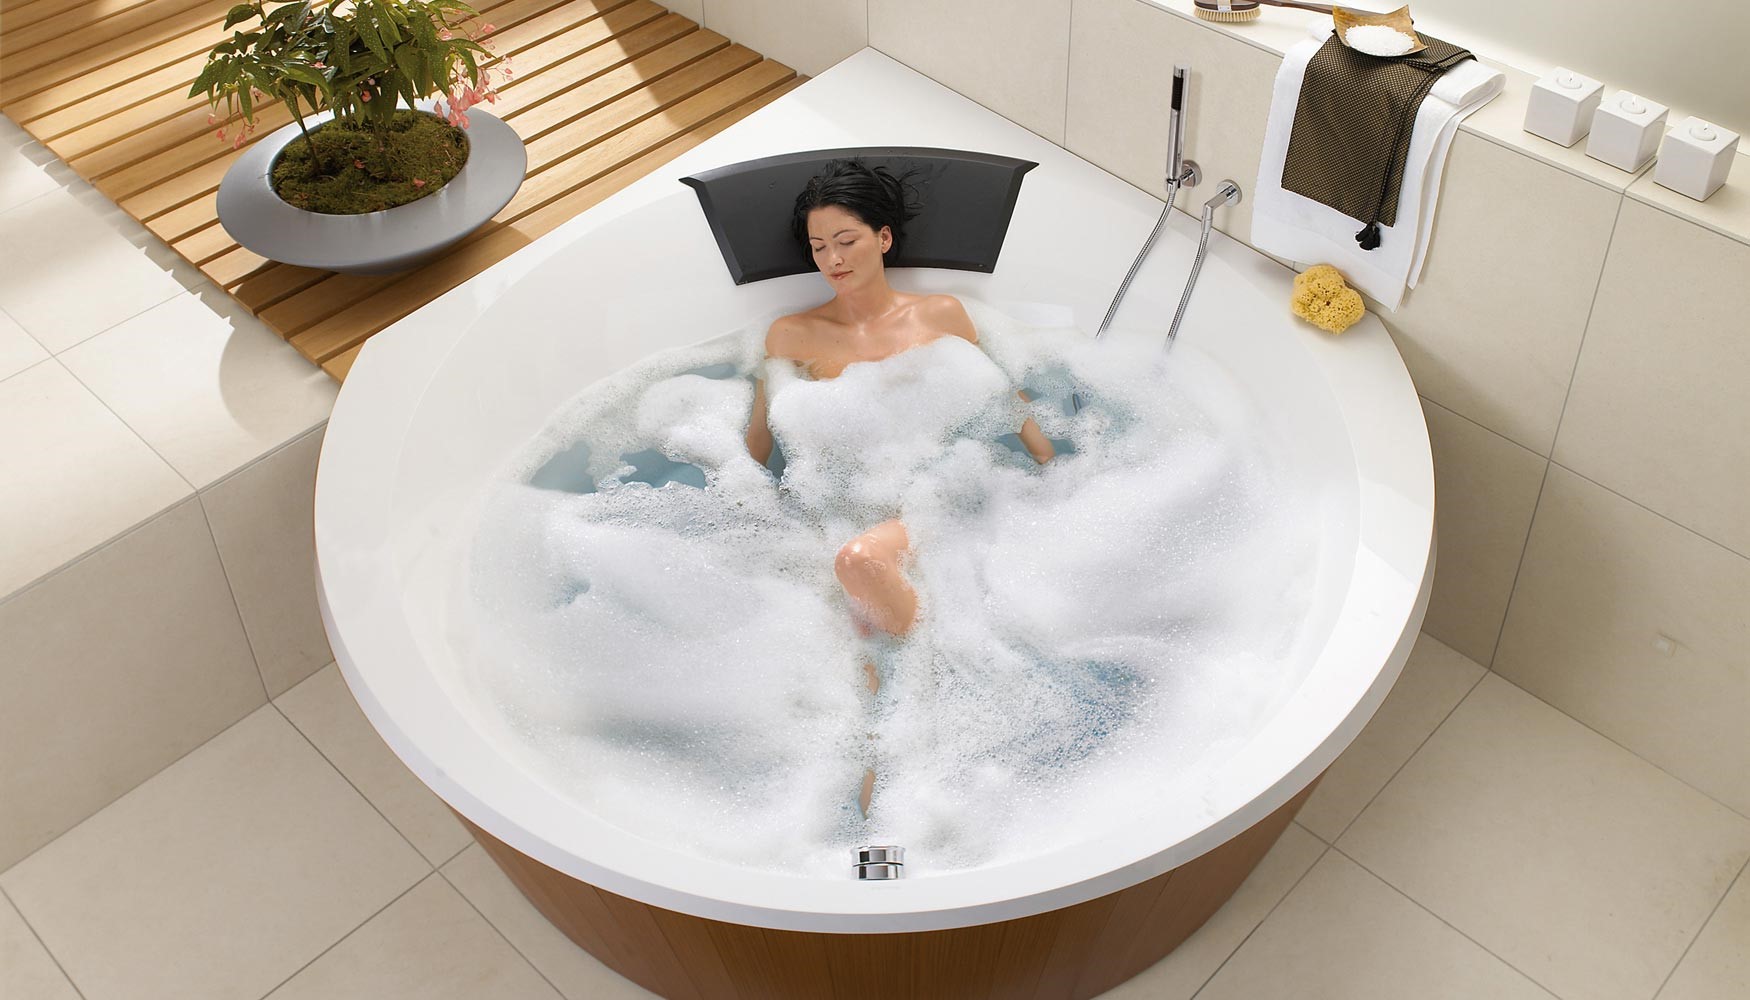 Bañera con hidromasaje, decora tu espacio interior